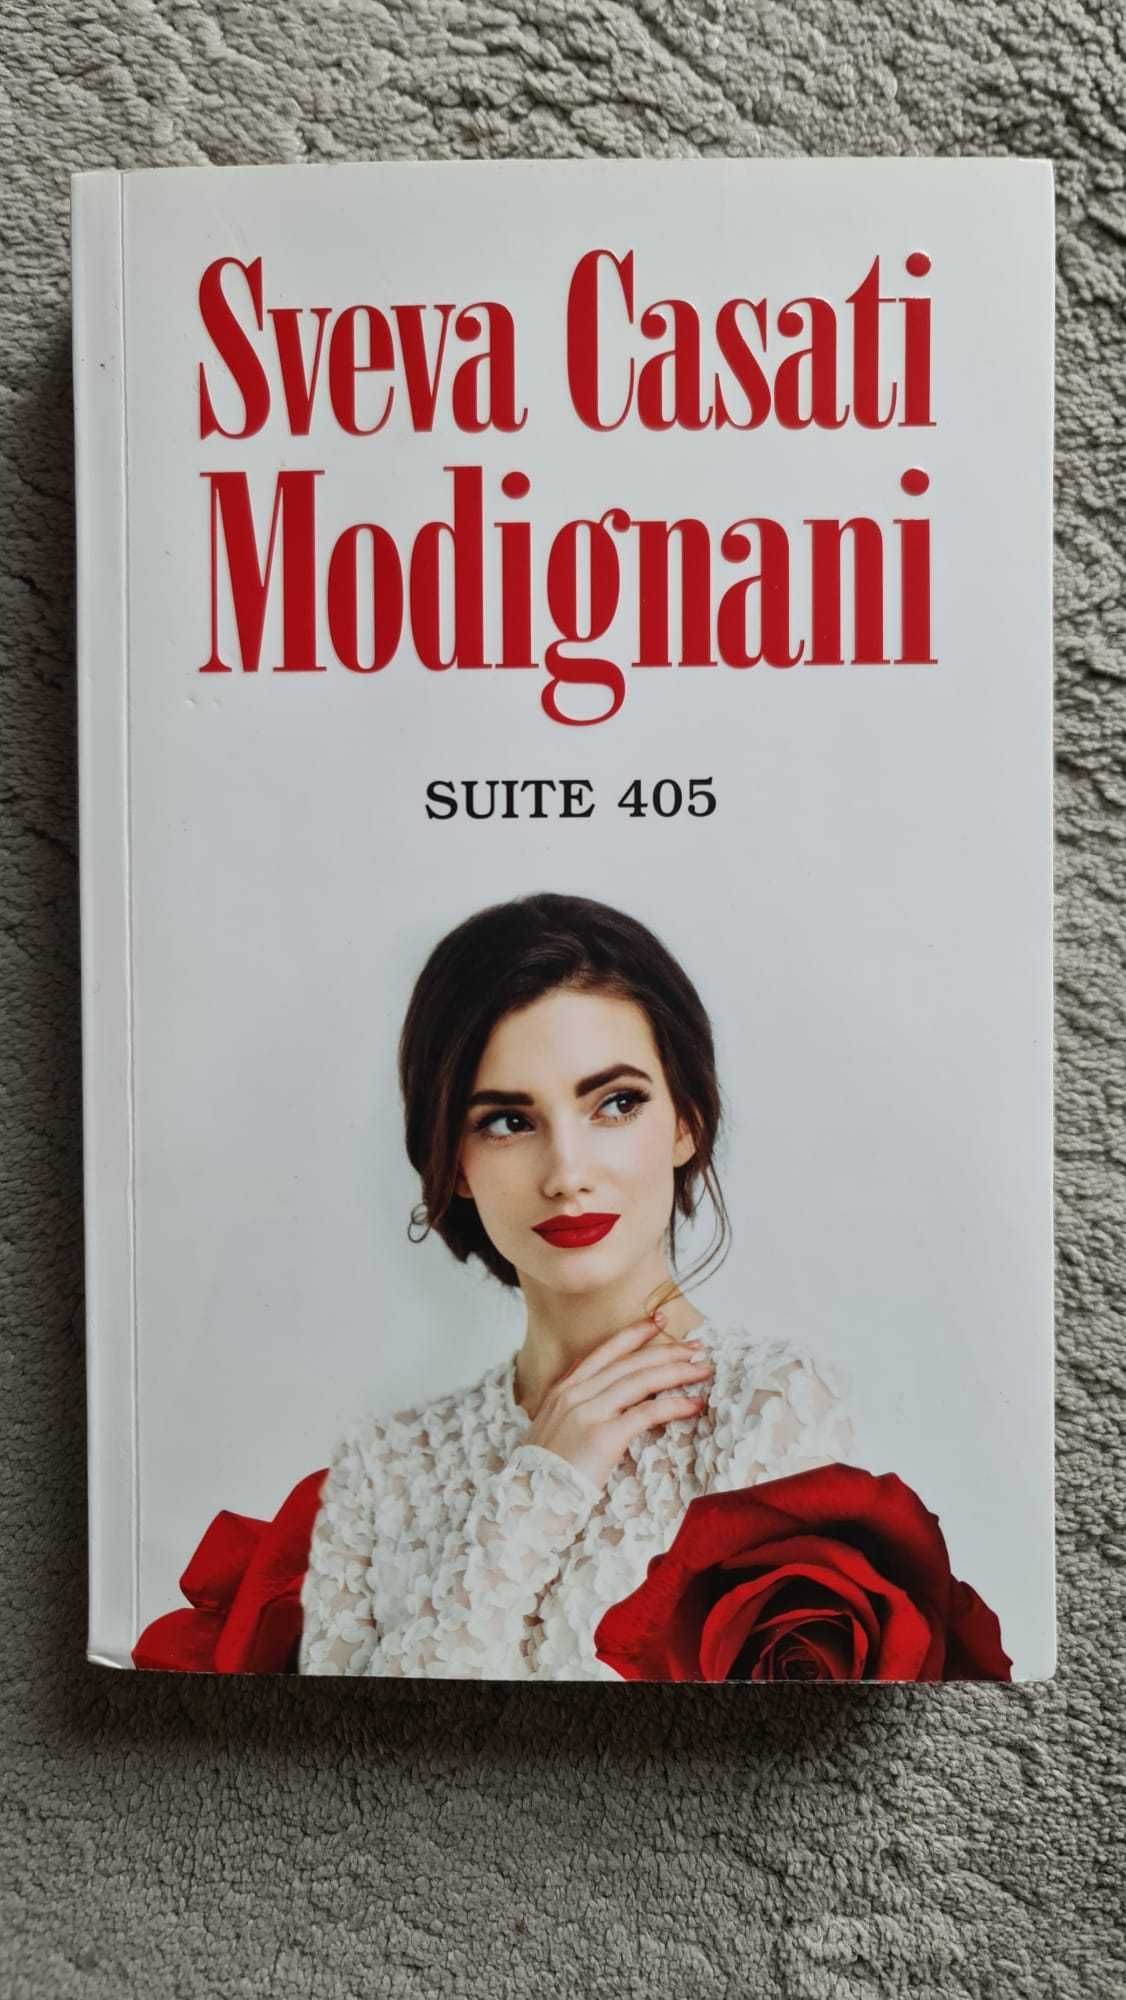 Vendo Livro de Sveva Casati Modignani - Suite 405